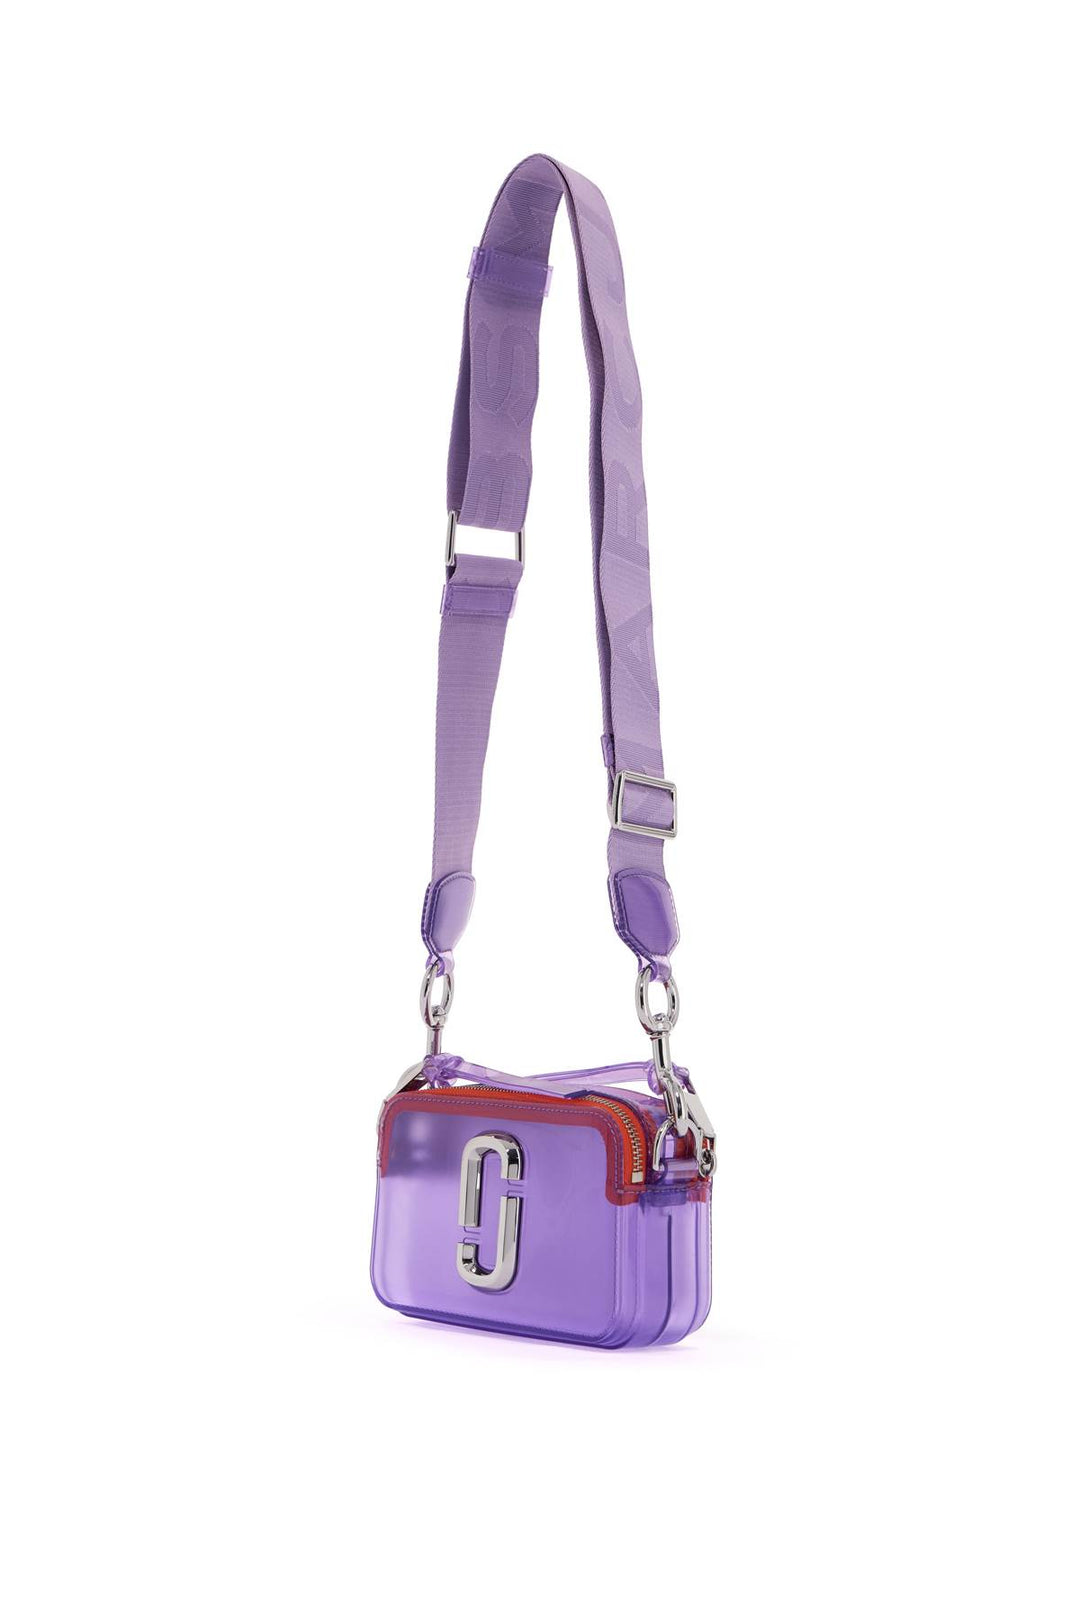 Marc Jacobs The Jelly Snapshot Handbag   Purple